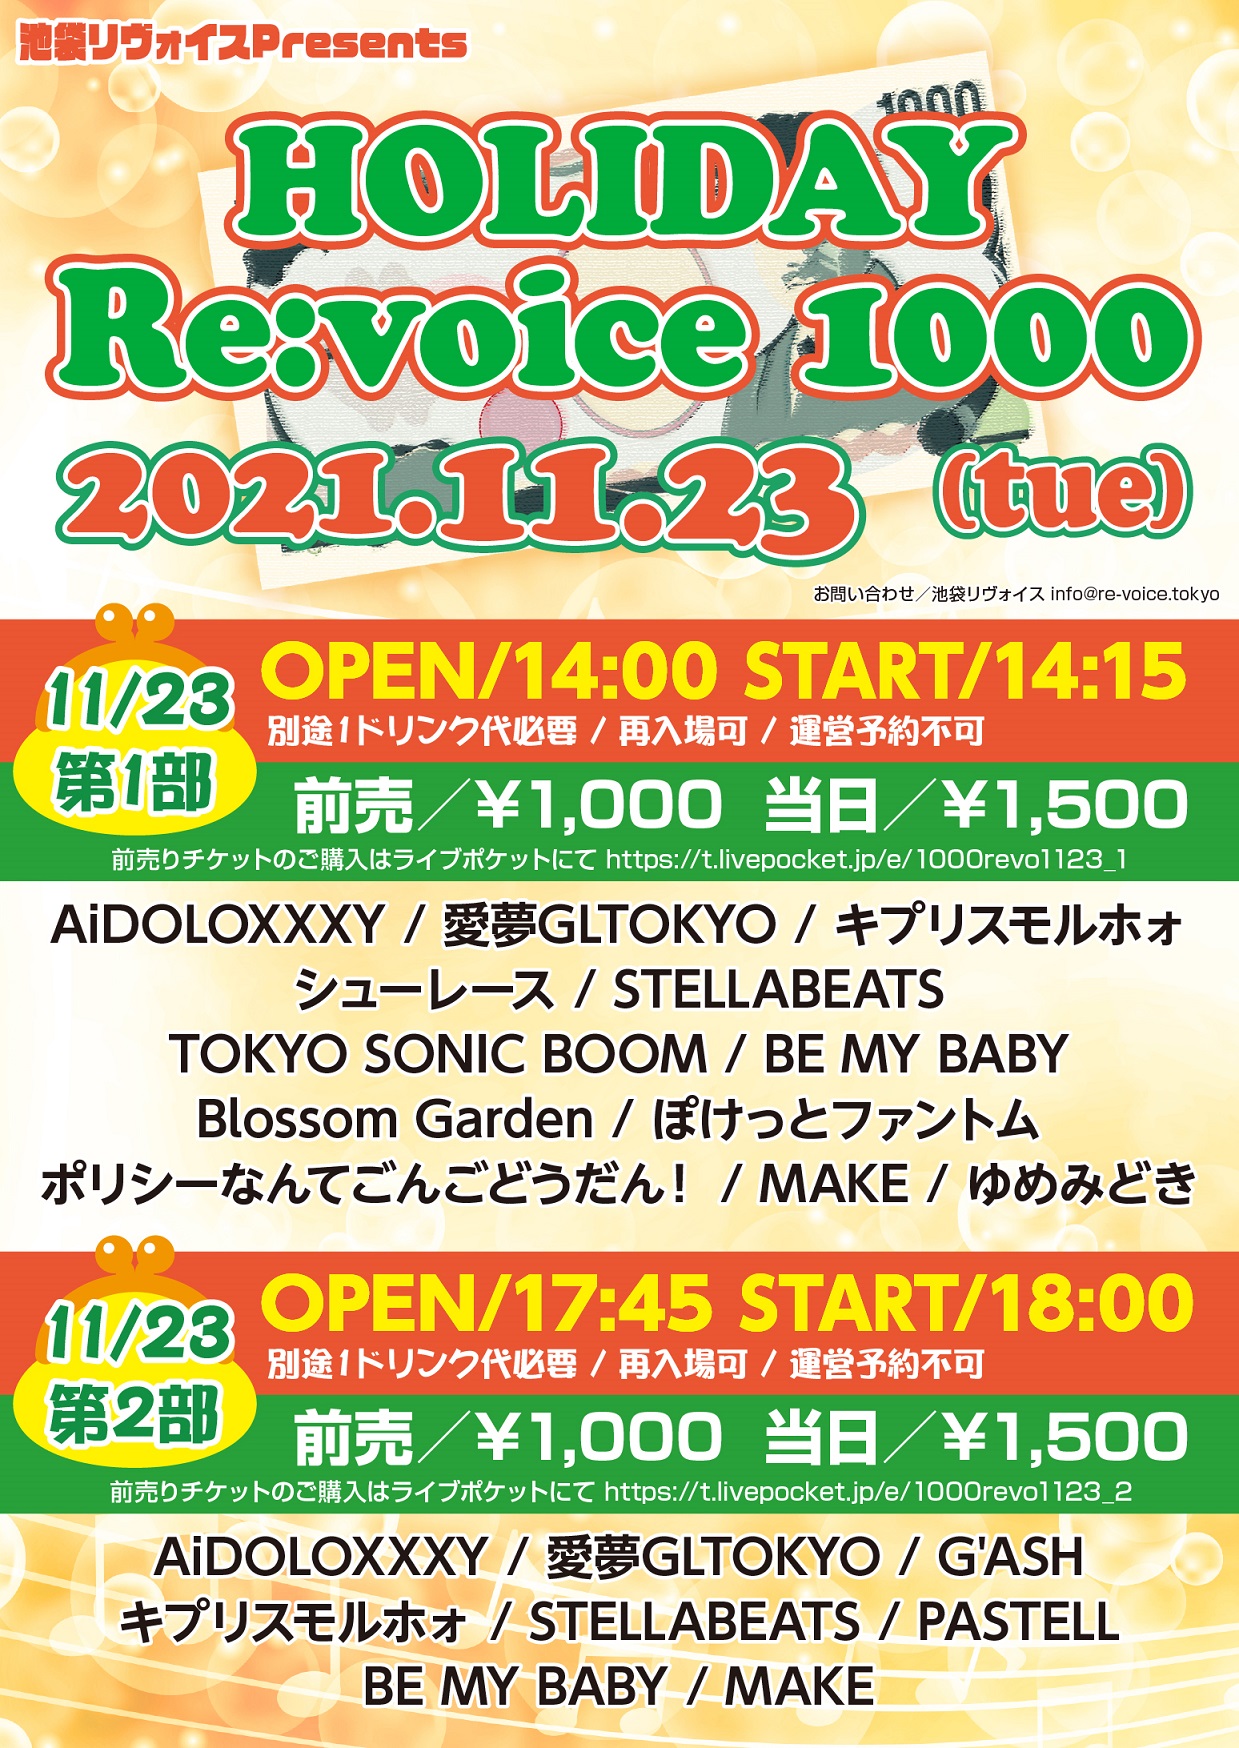 【第一部】HOLIDAY Re:voice 1000